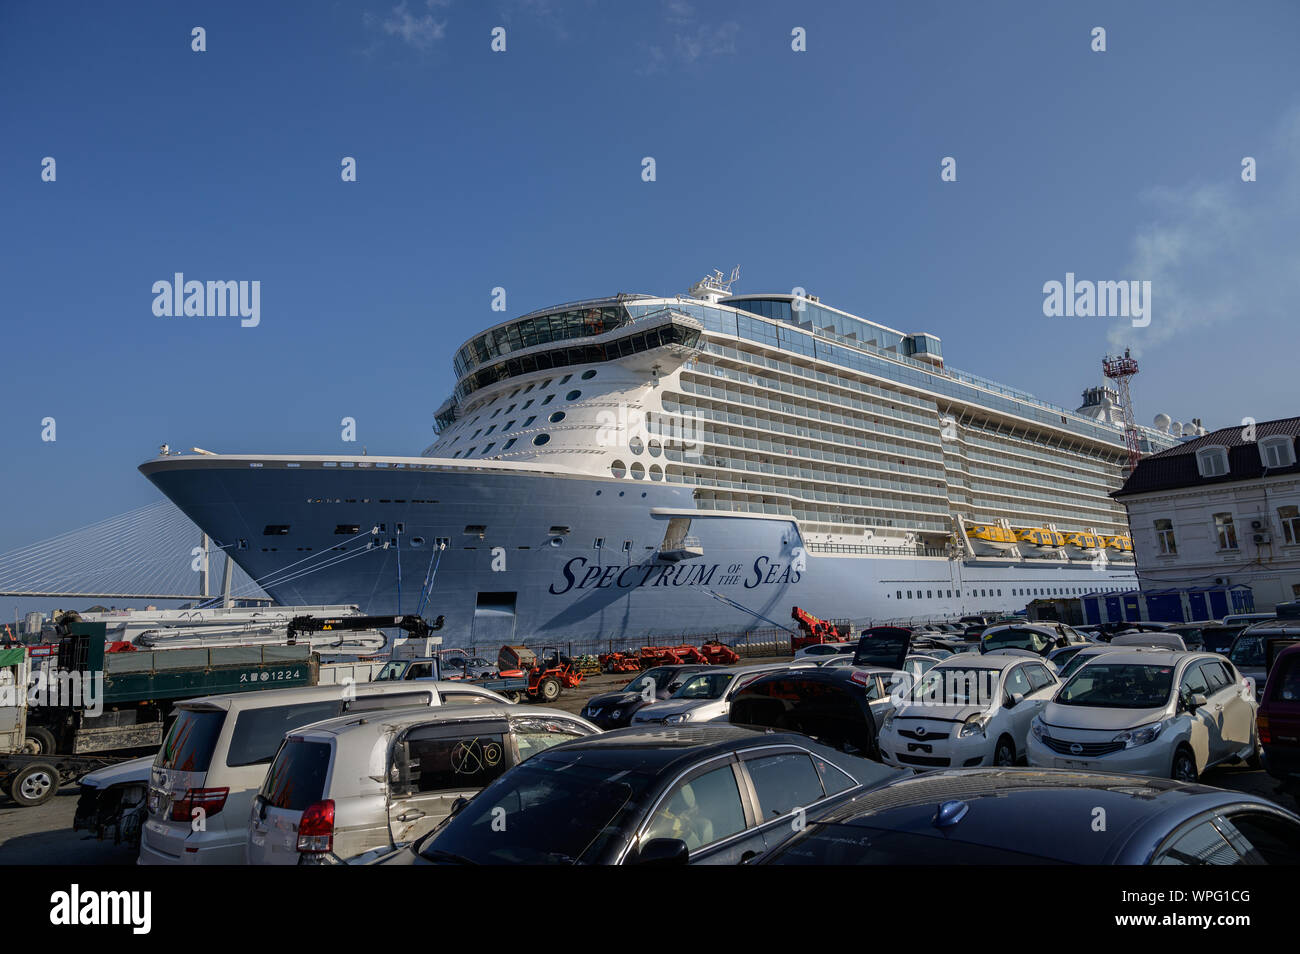 VLADIVOSTOK, RUSSIA - SEPTEMBER 9, 2019: The Quantum-class cruise ship